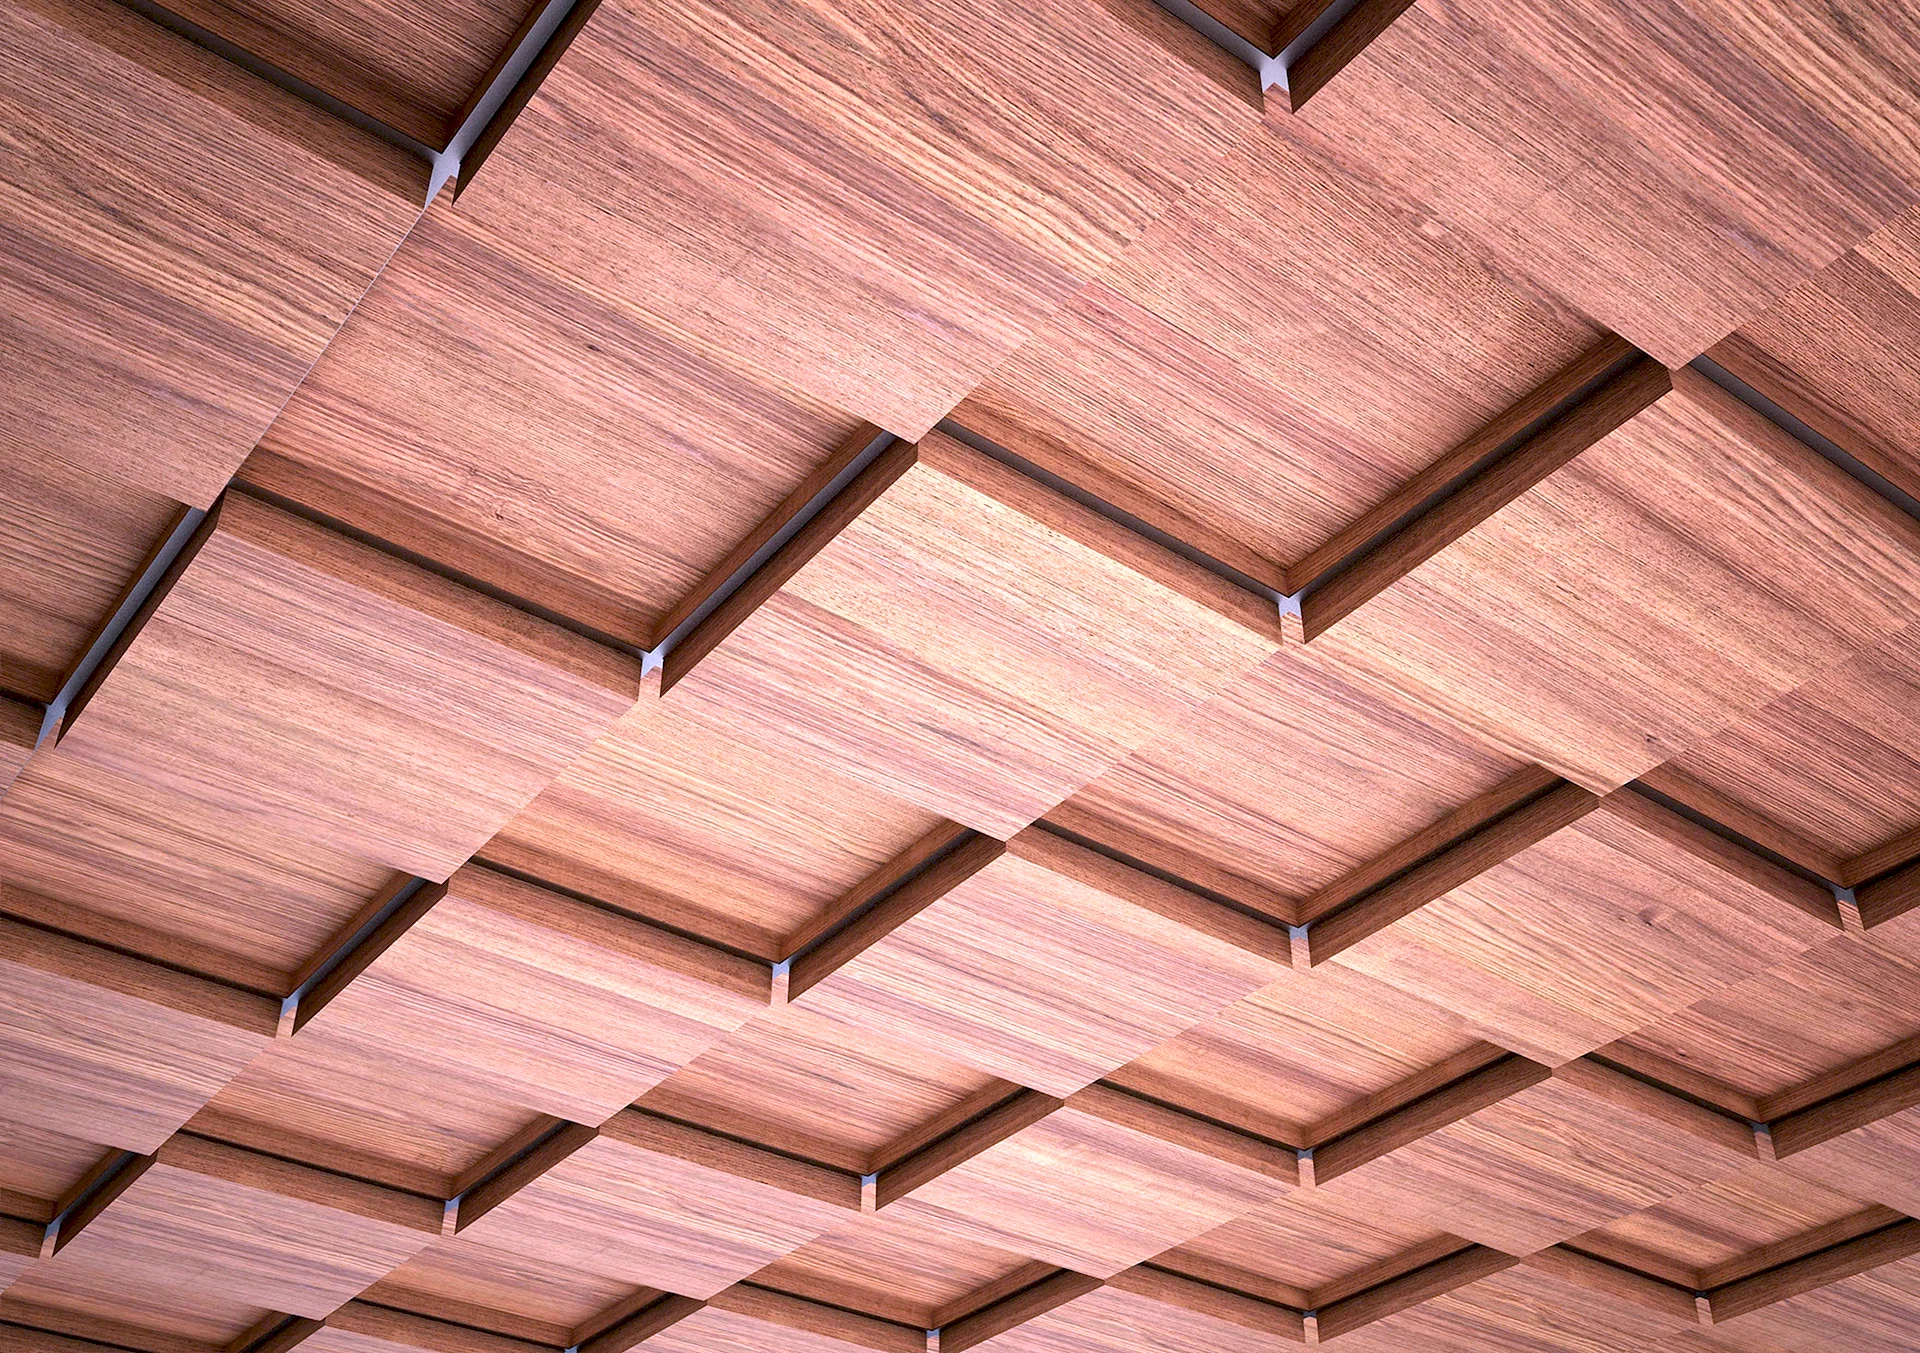 Wooden Tiles Ceiling Tiles Wallpaper